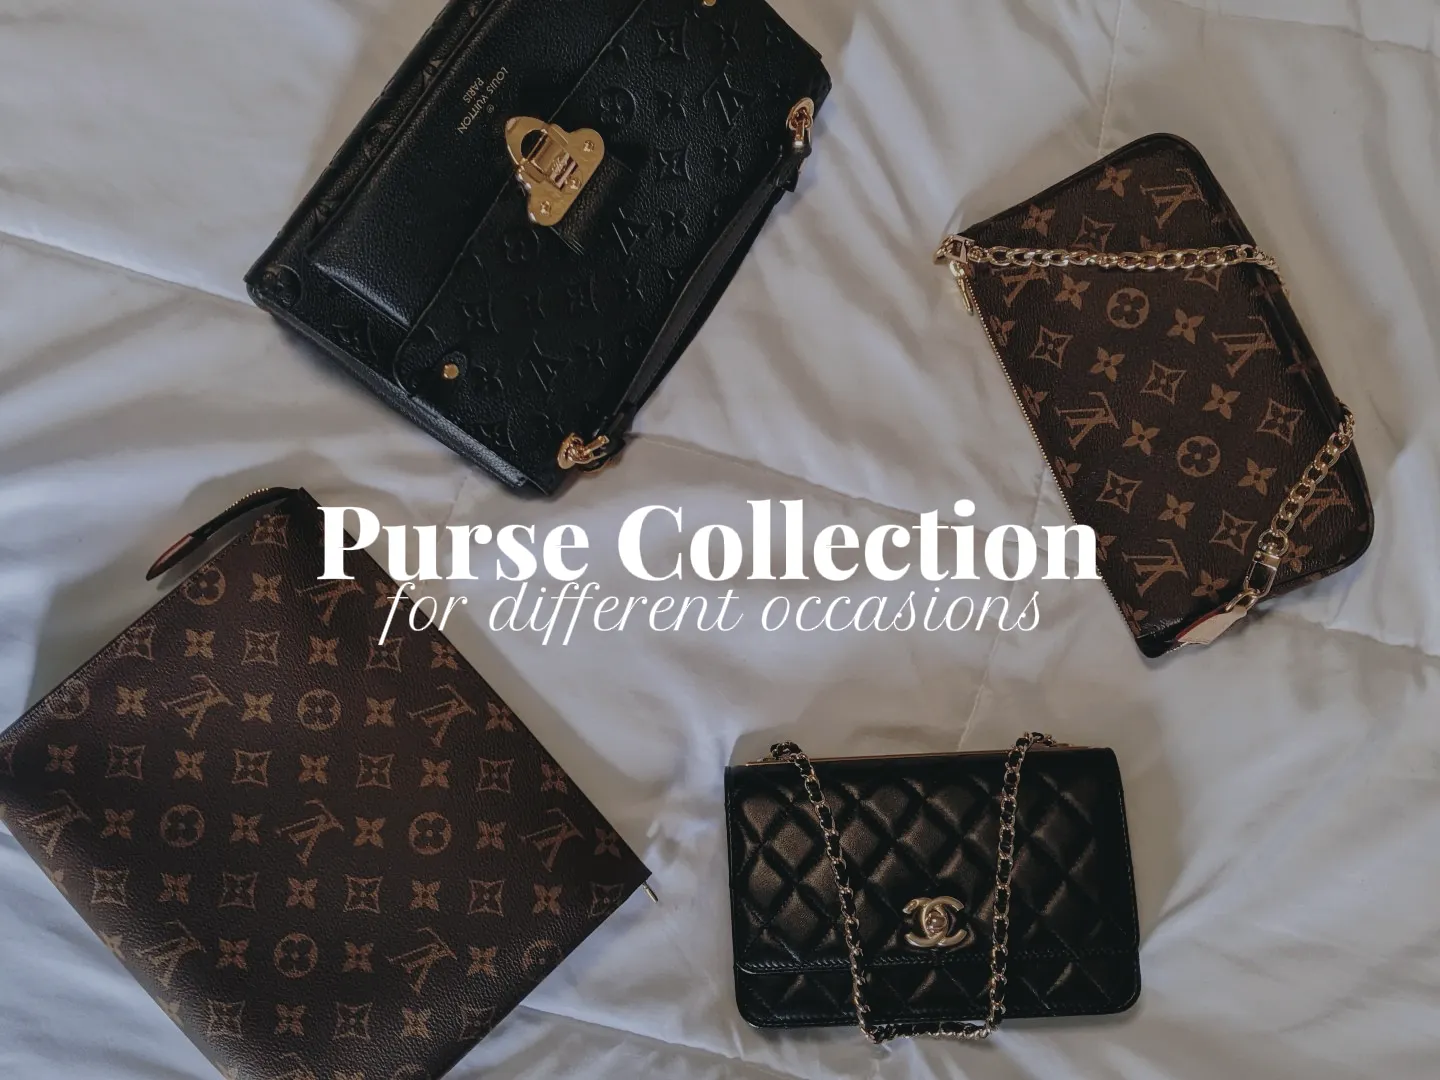 Kea on X: I deserve to own a Louis Vuitton paint bag, I really do